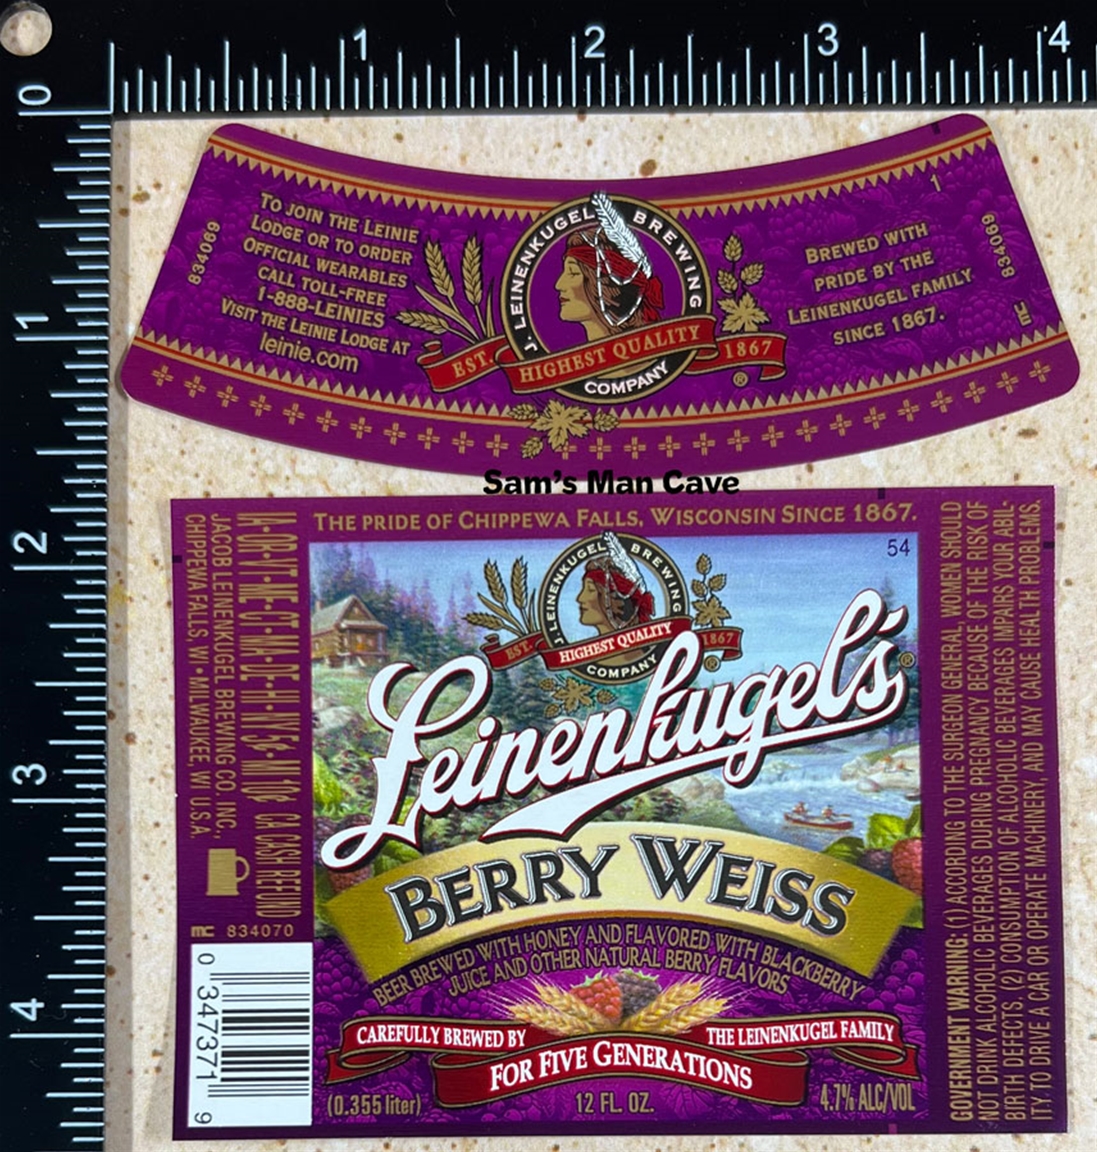 Leinenkugel's Berry Weiss Beer Label with neck